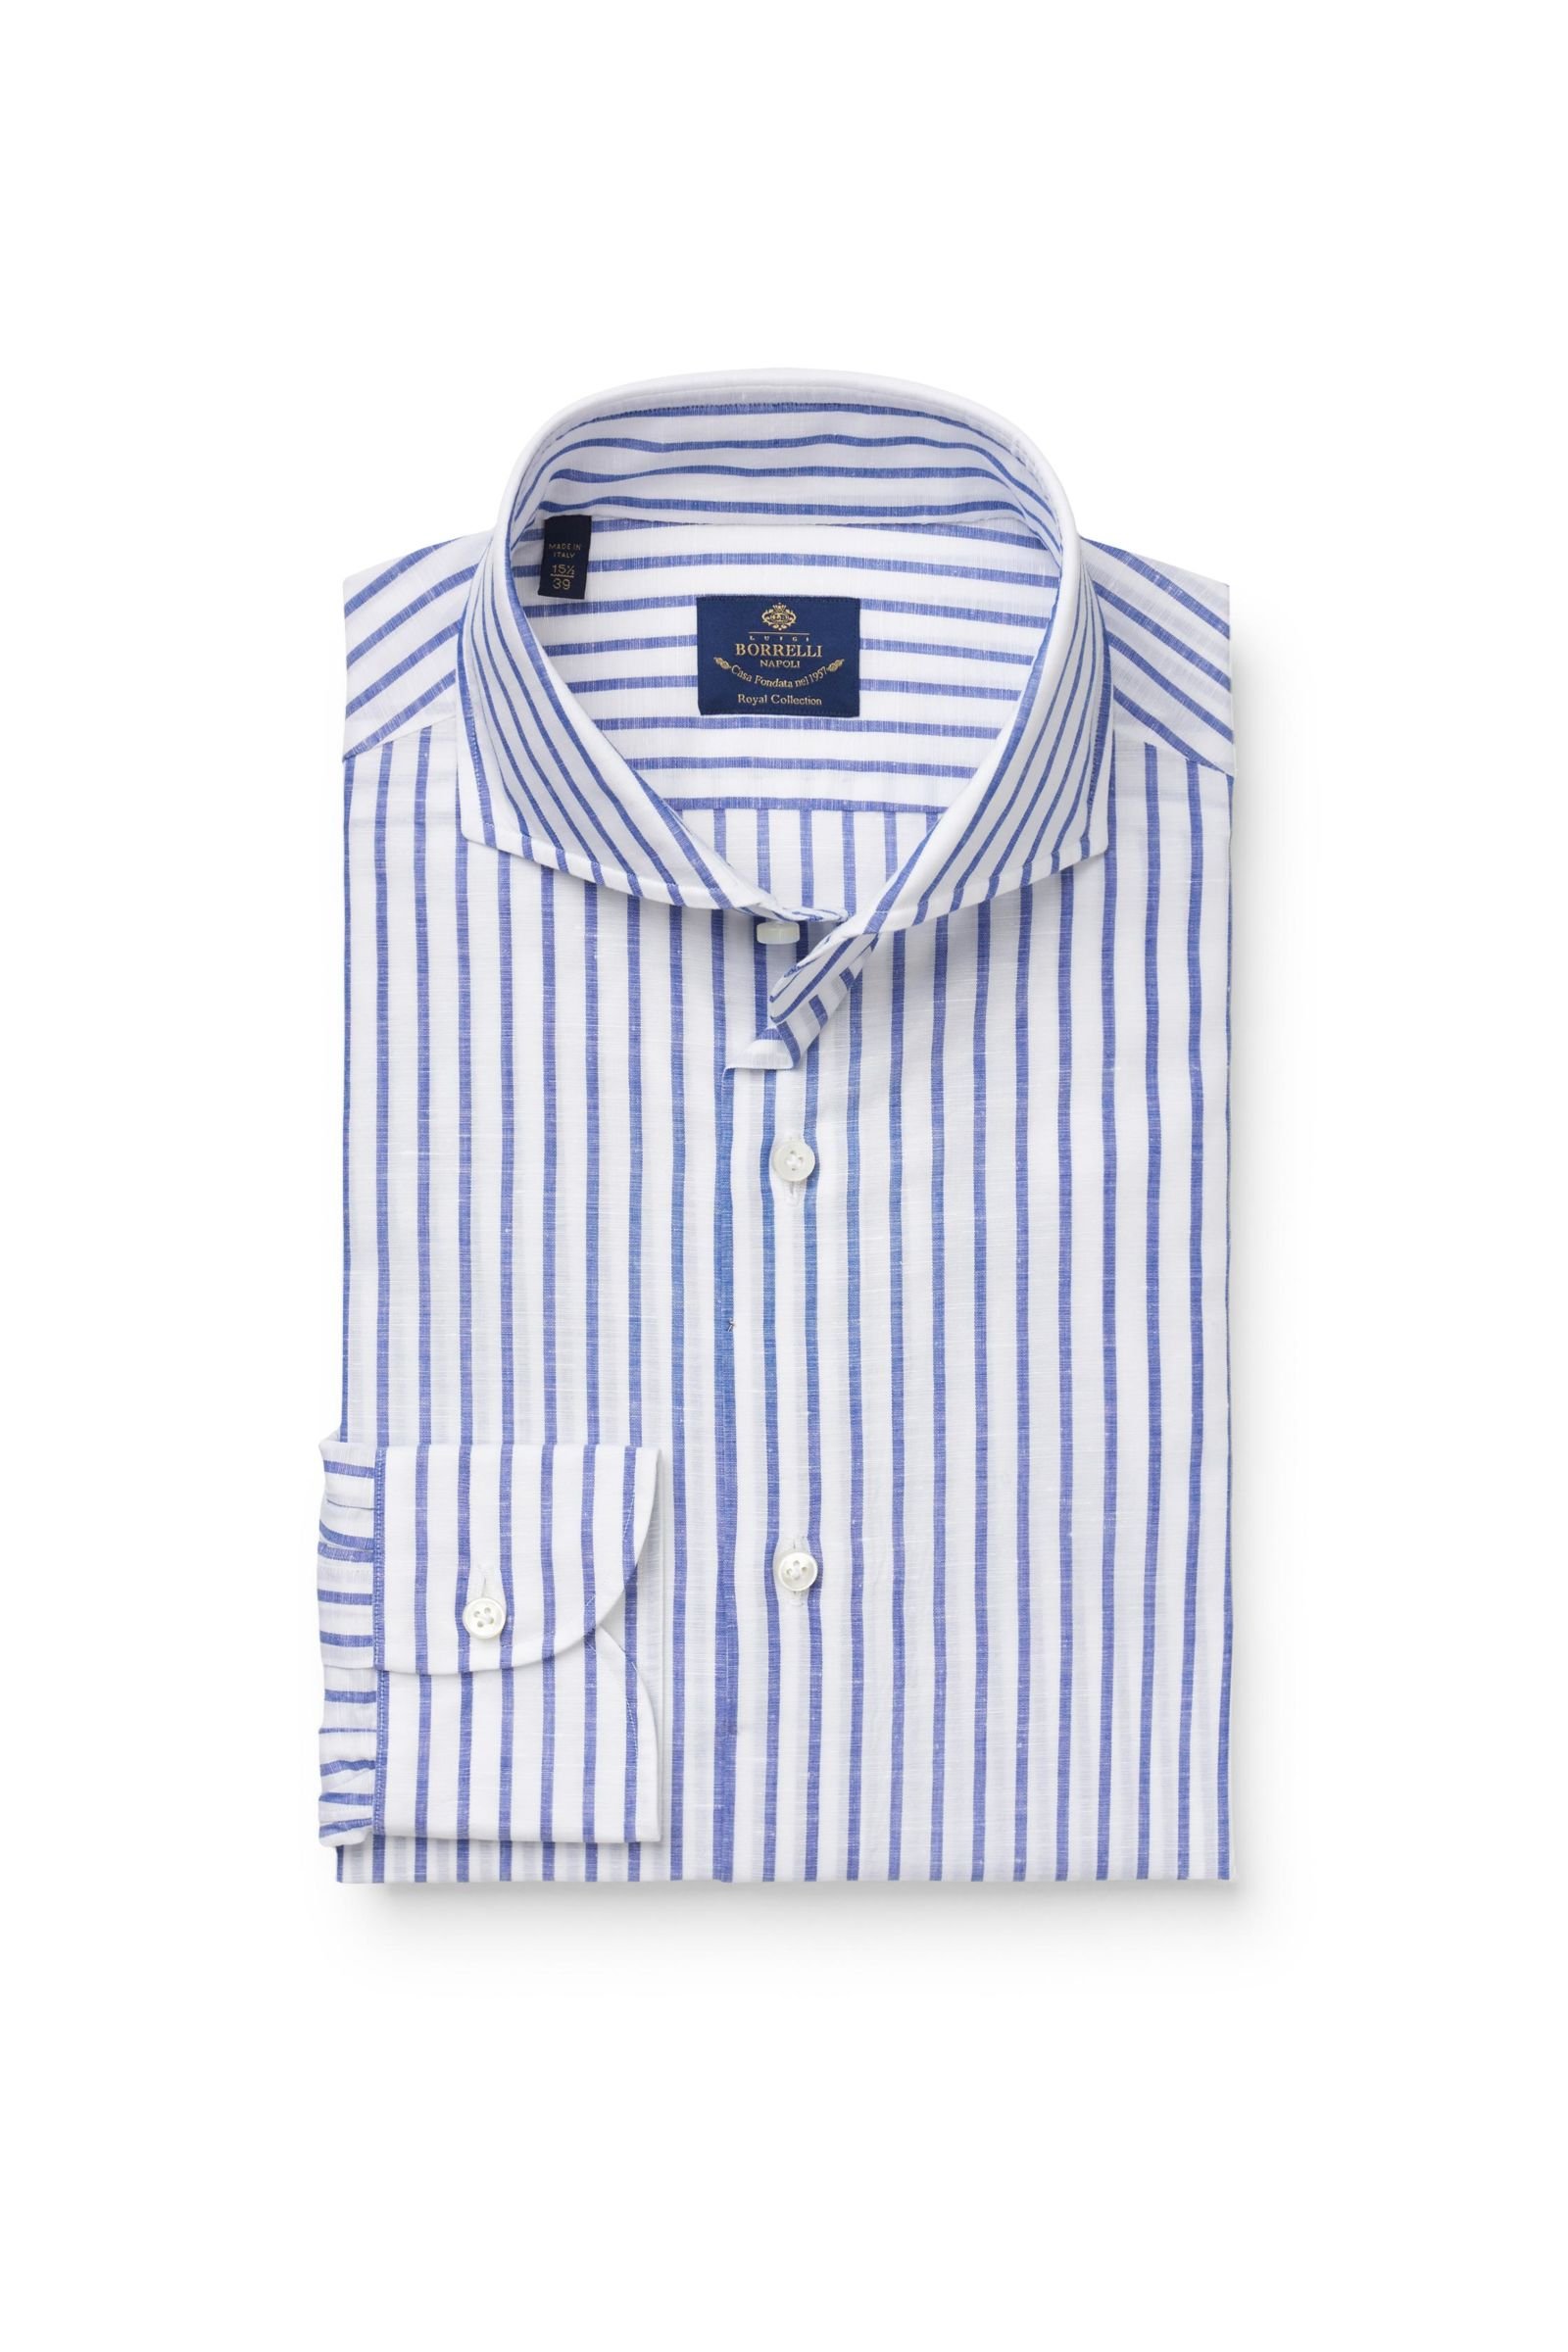 Business shirt 'Felice' shark collar smoky blue/white striped